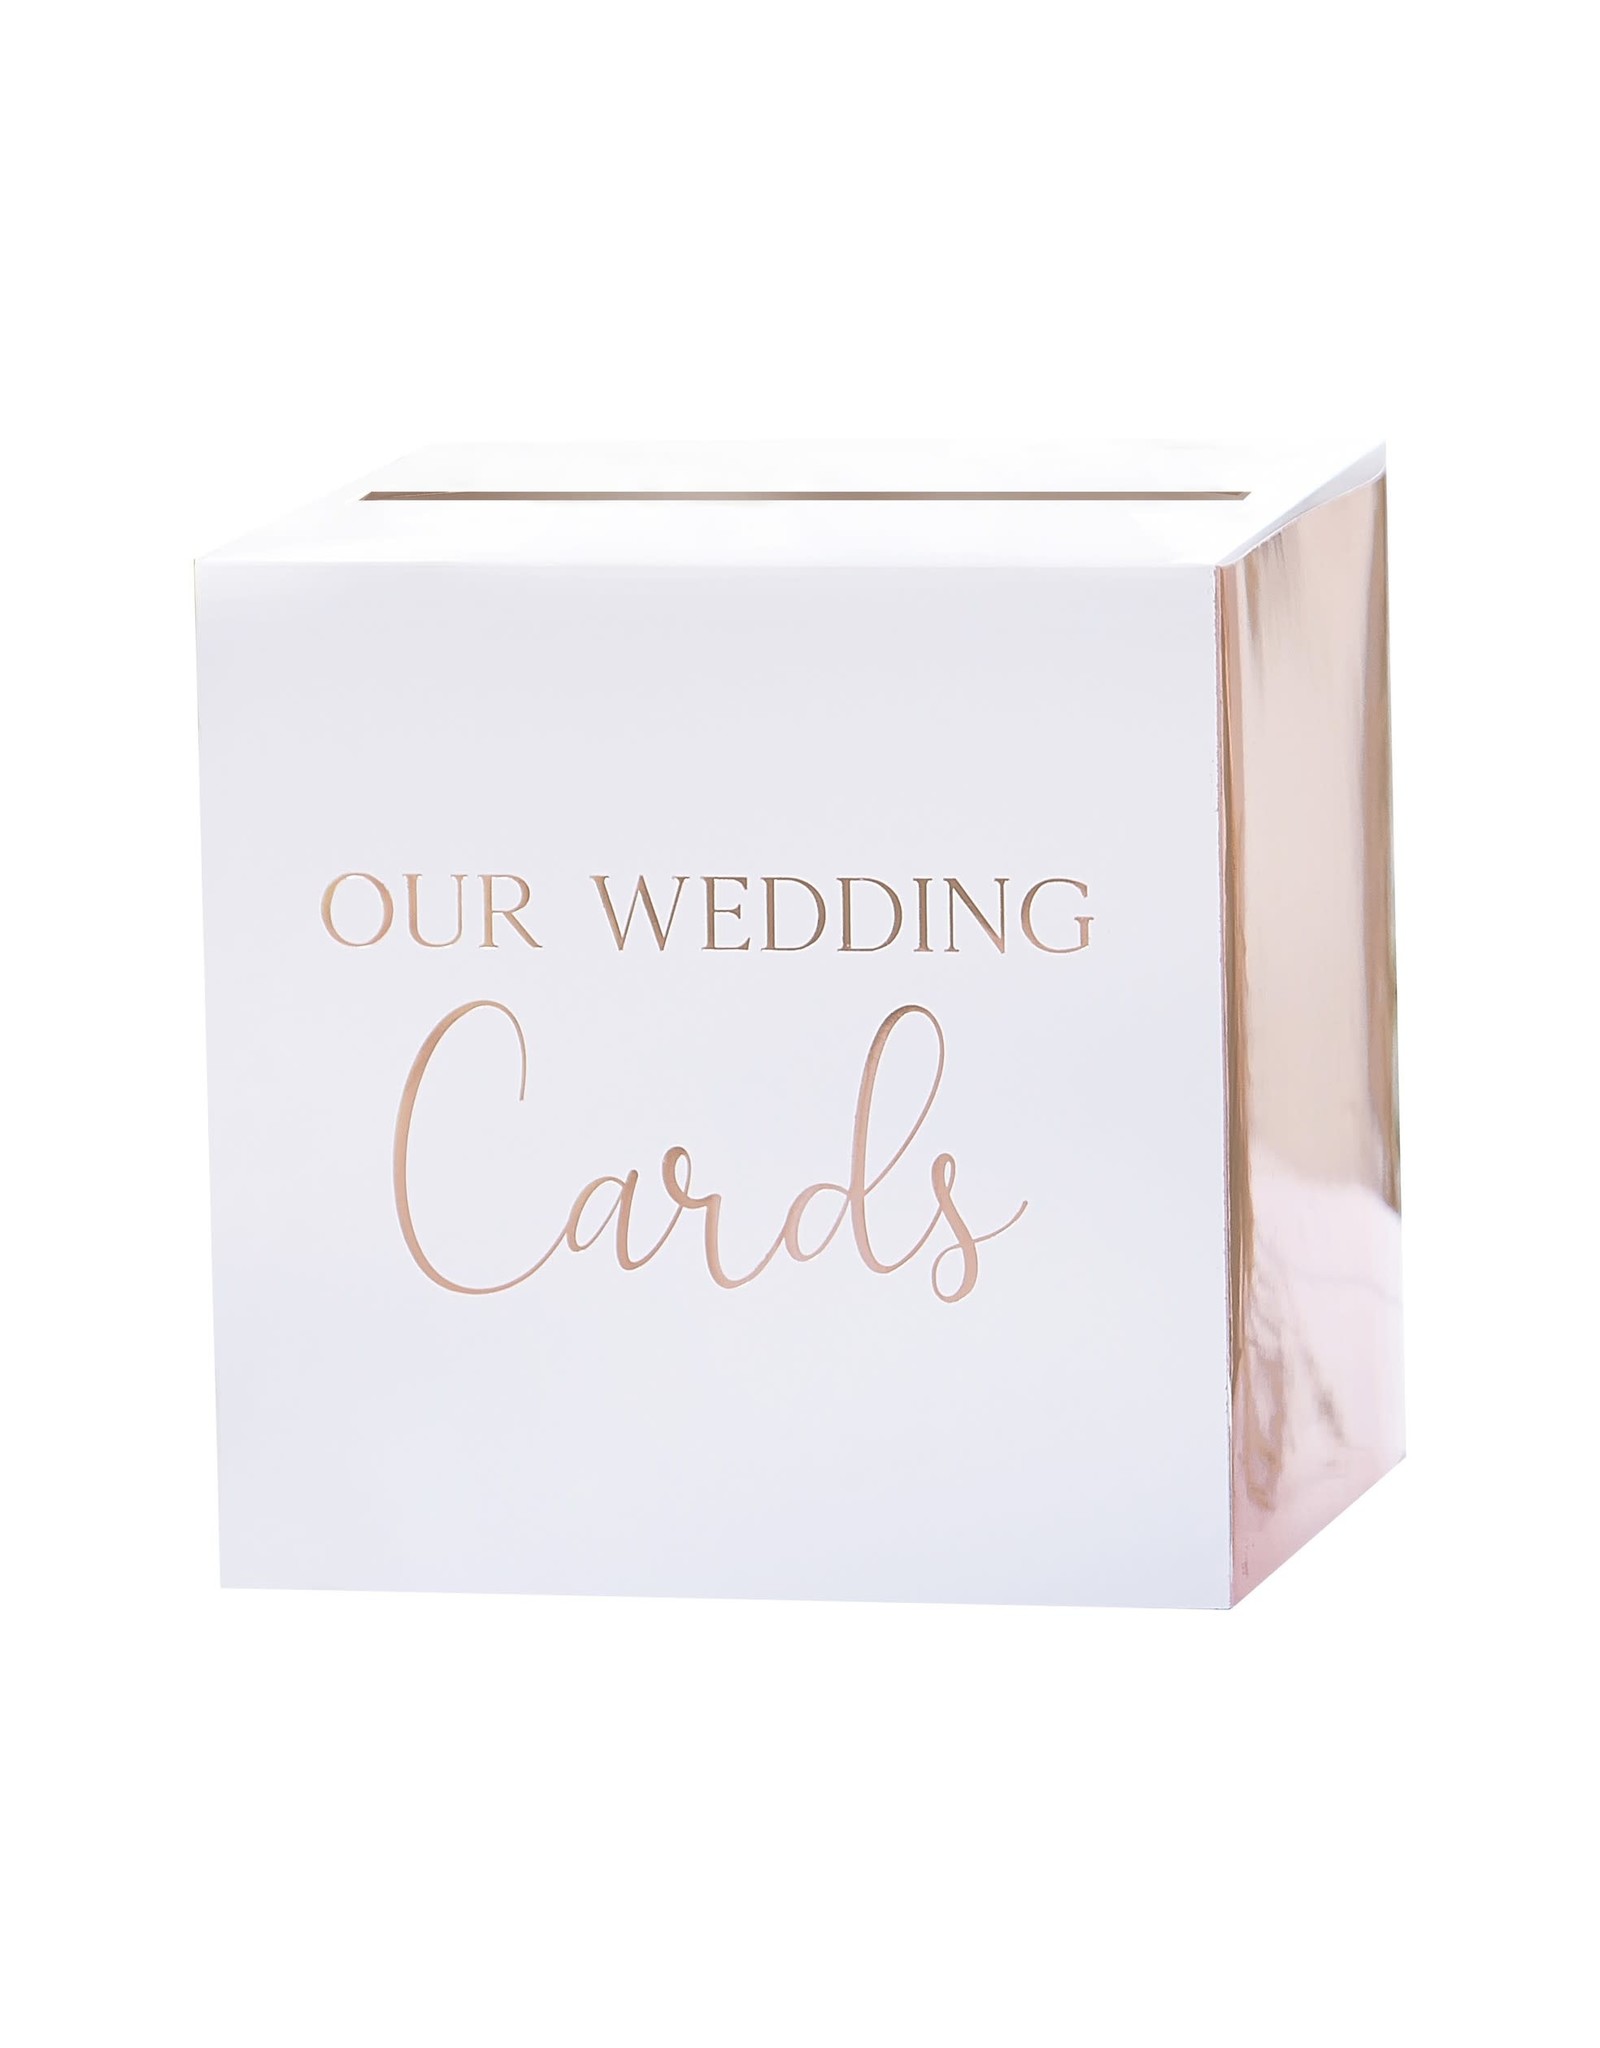 Enveloppendoos wit met rosé goud (our wedding cards)